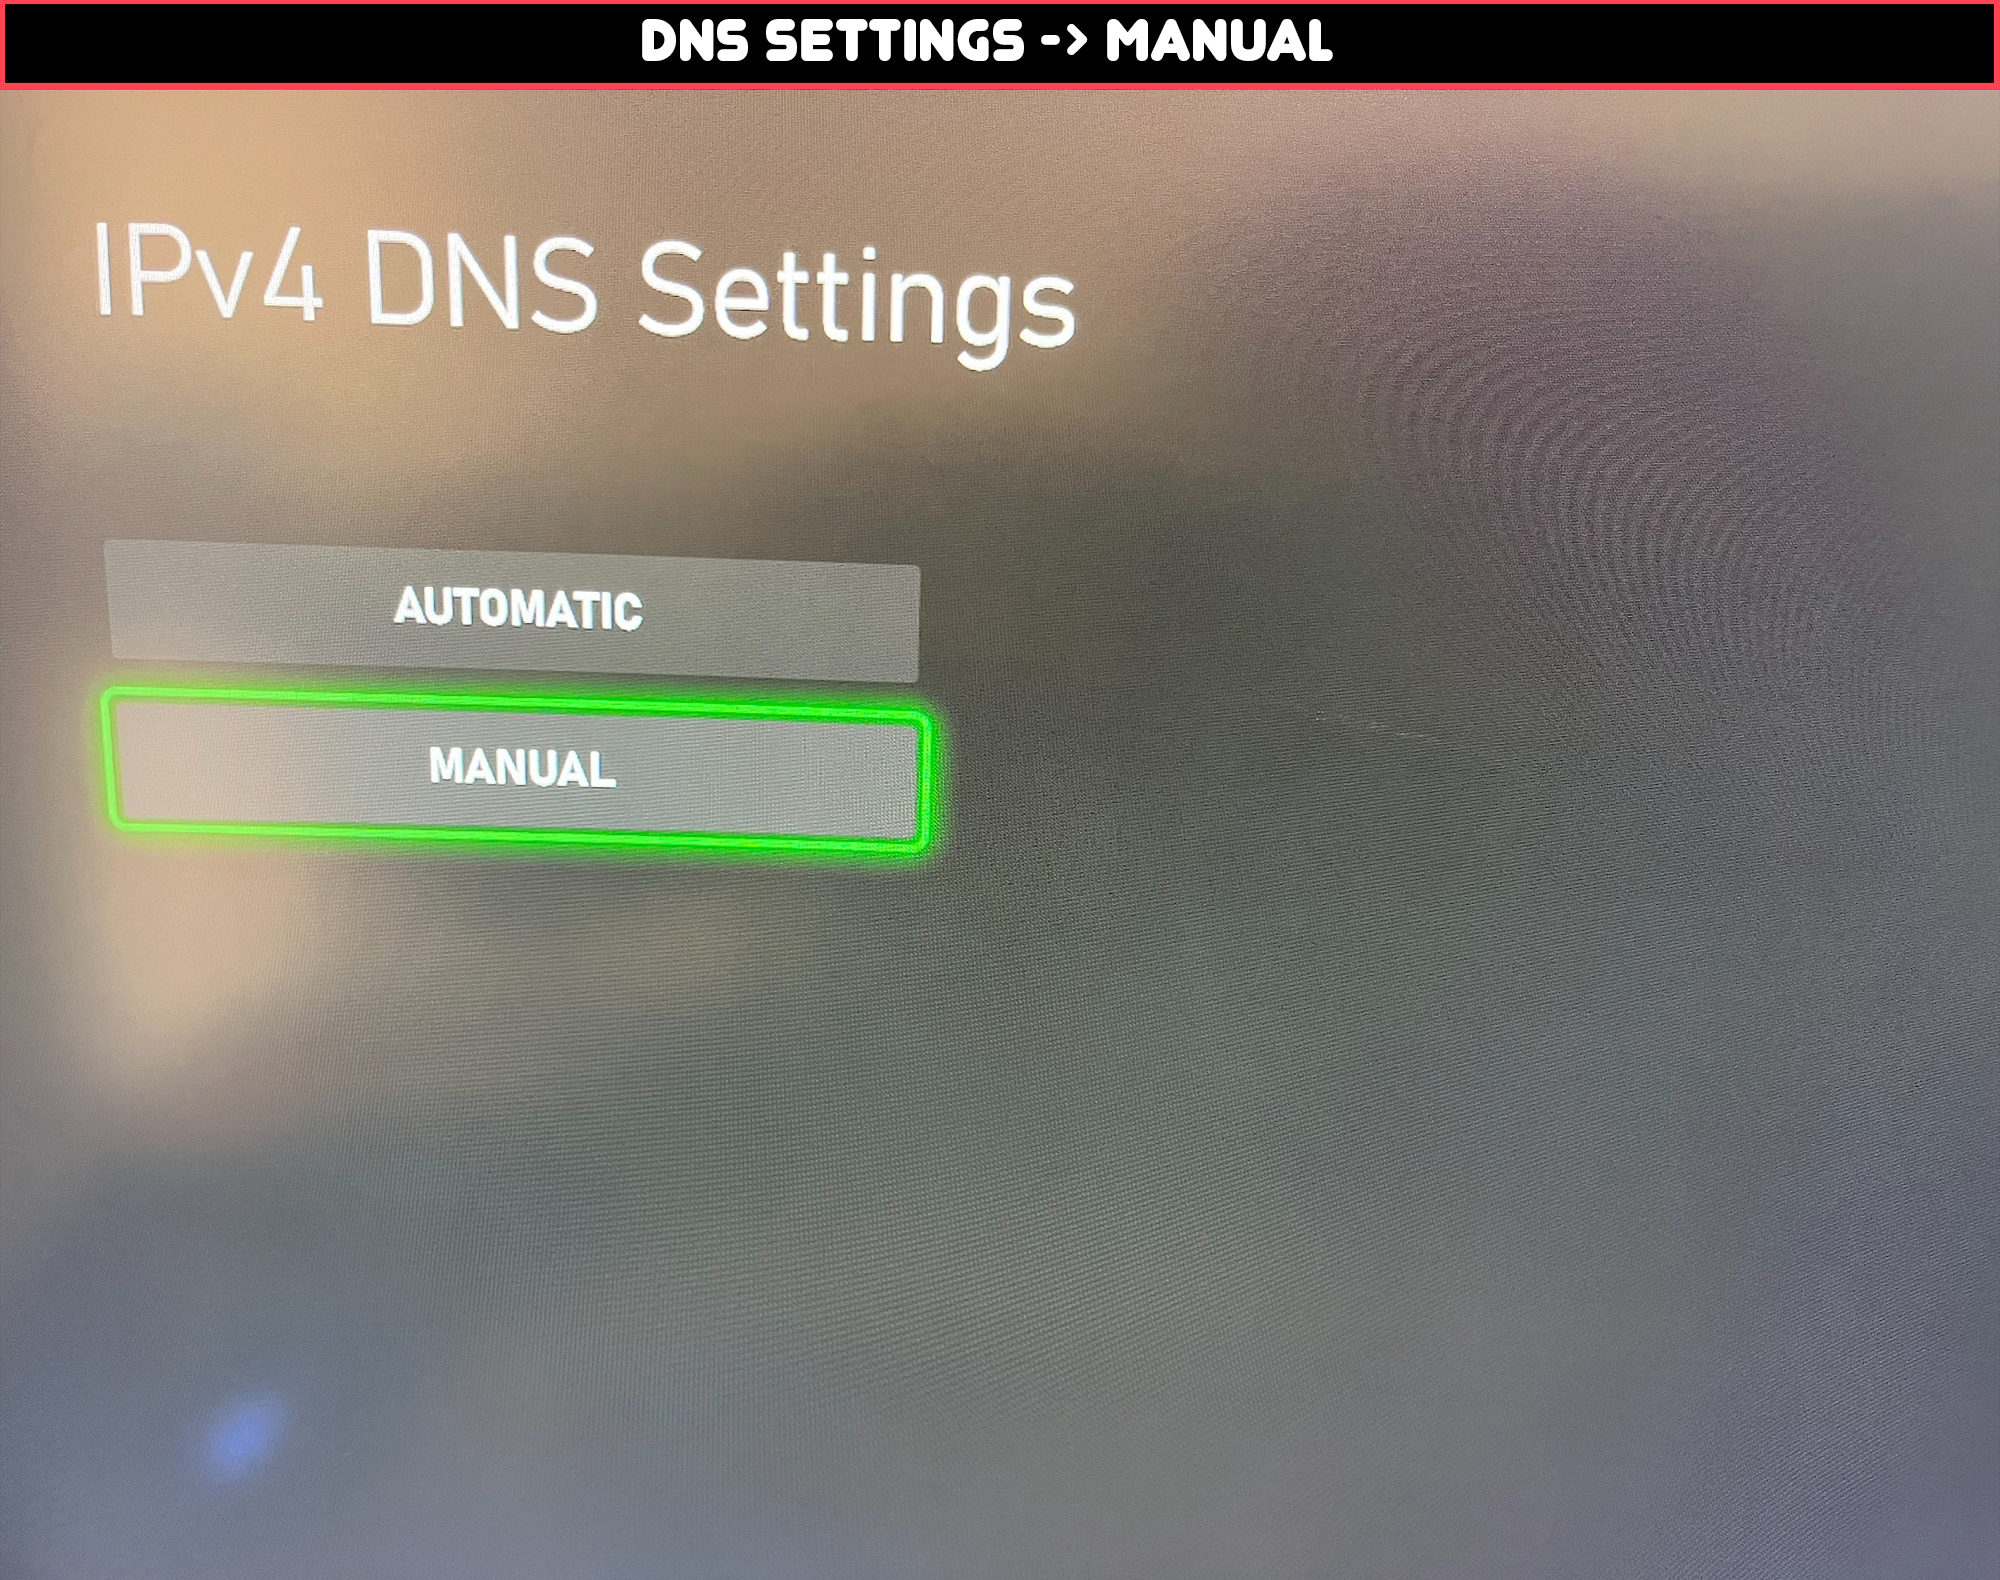 Xbox DNS Settings: Manual